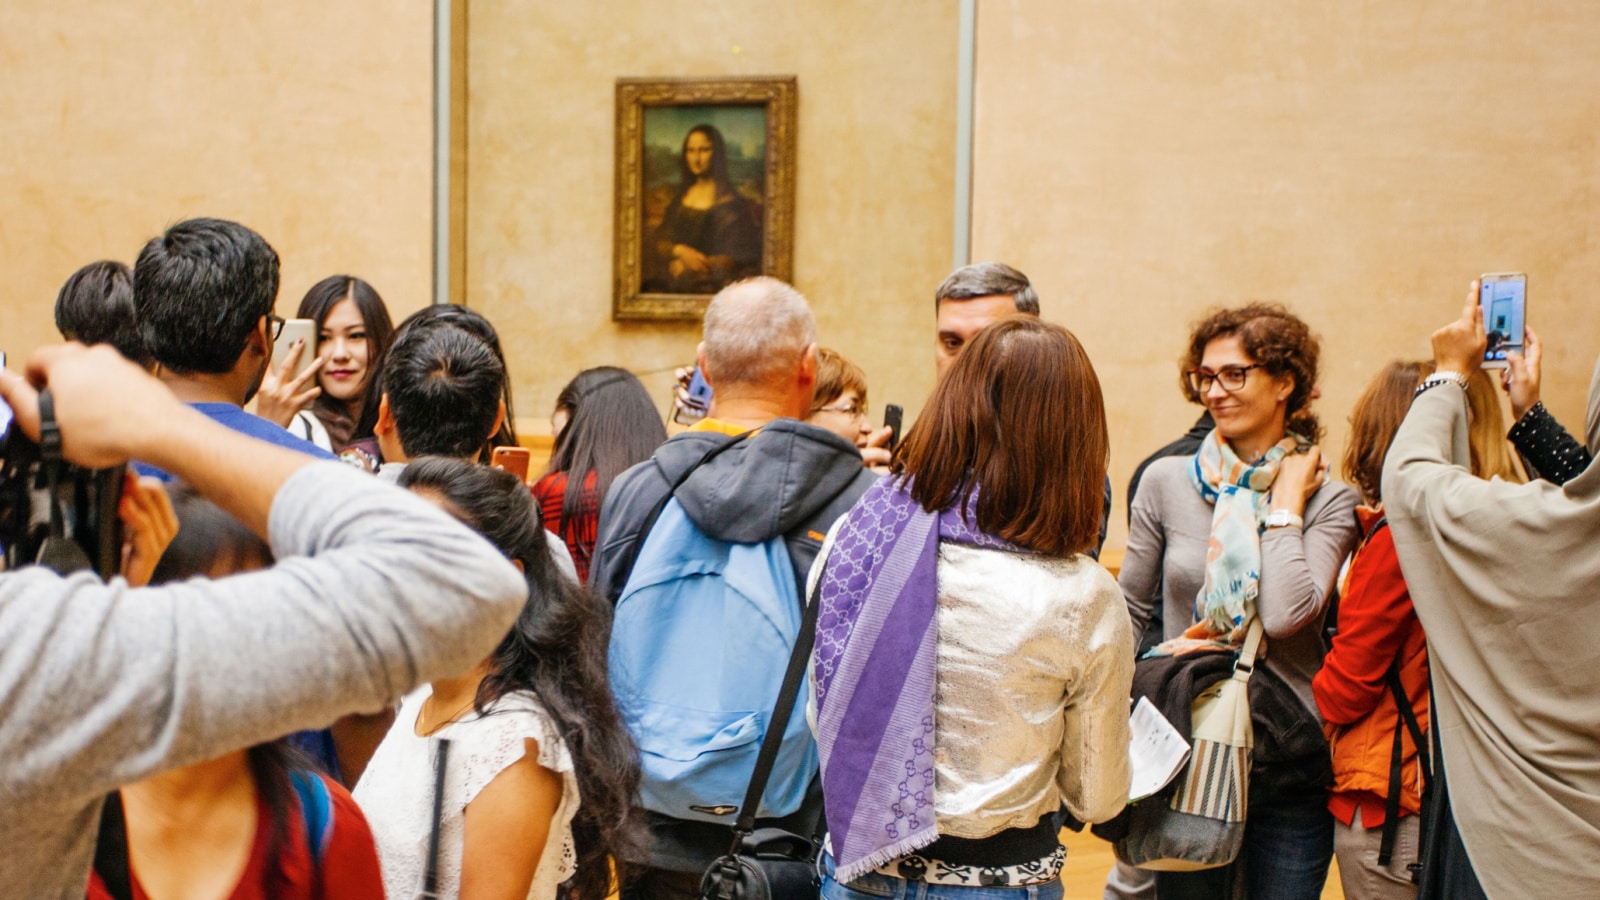 PARIS, FRANCE - October 11, 2016: Visitors take photo of Leonardo DaVinci's "Mona Lisa" at the Louvre Museum